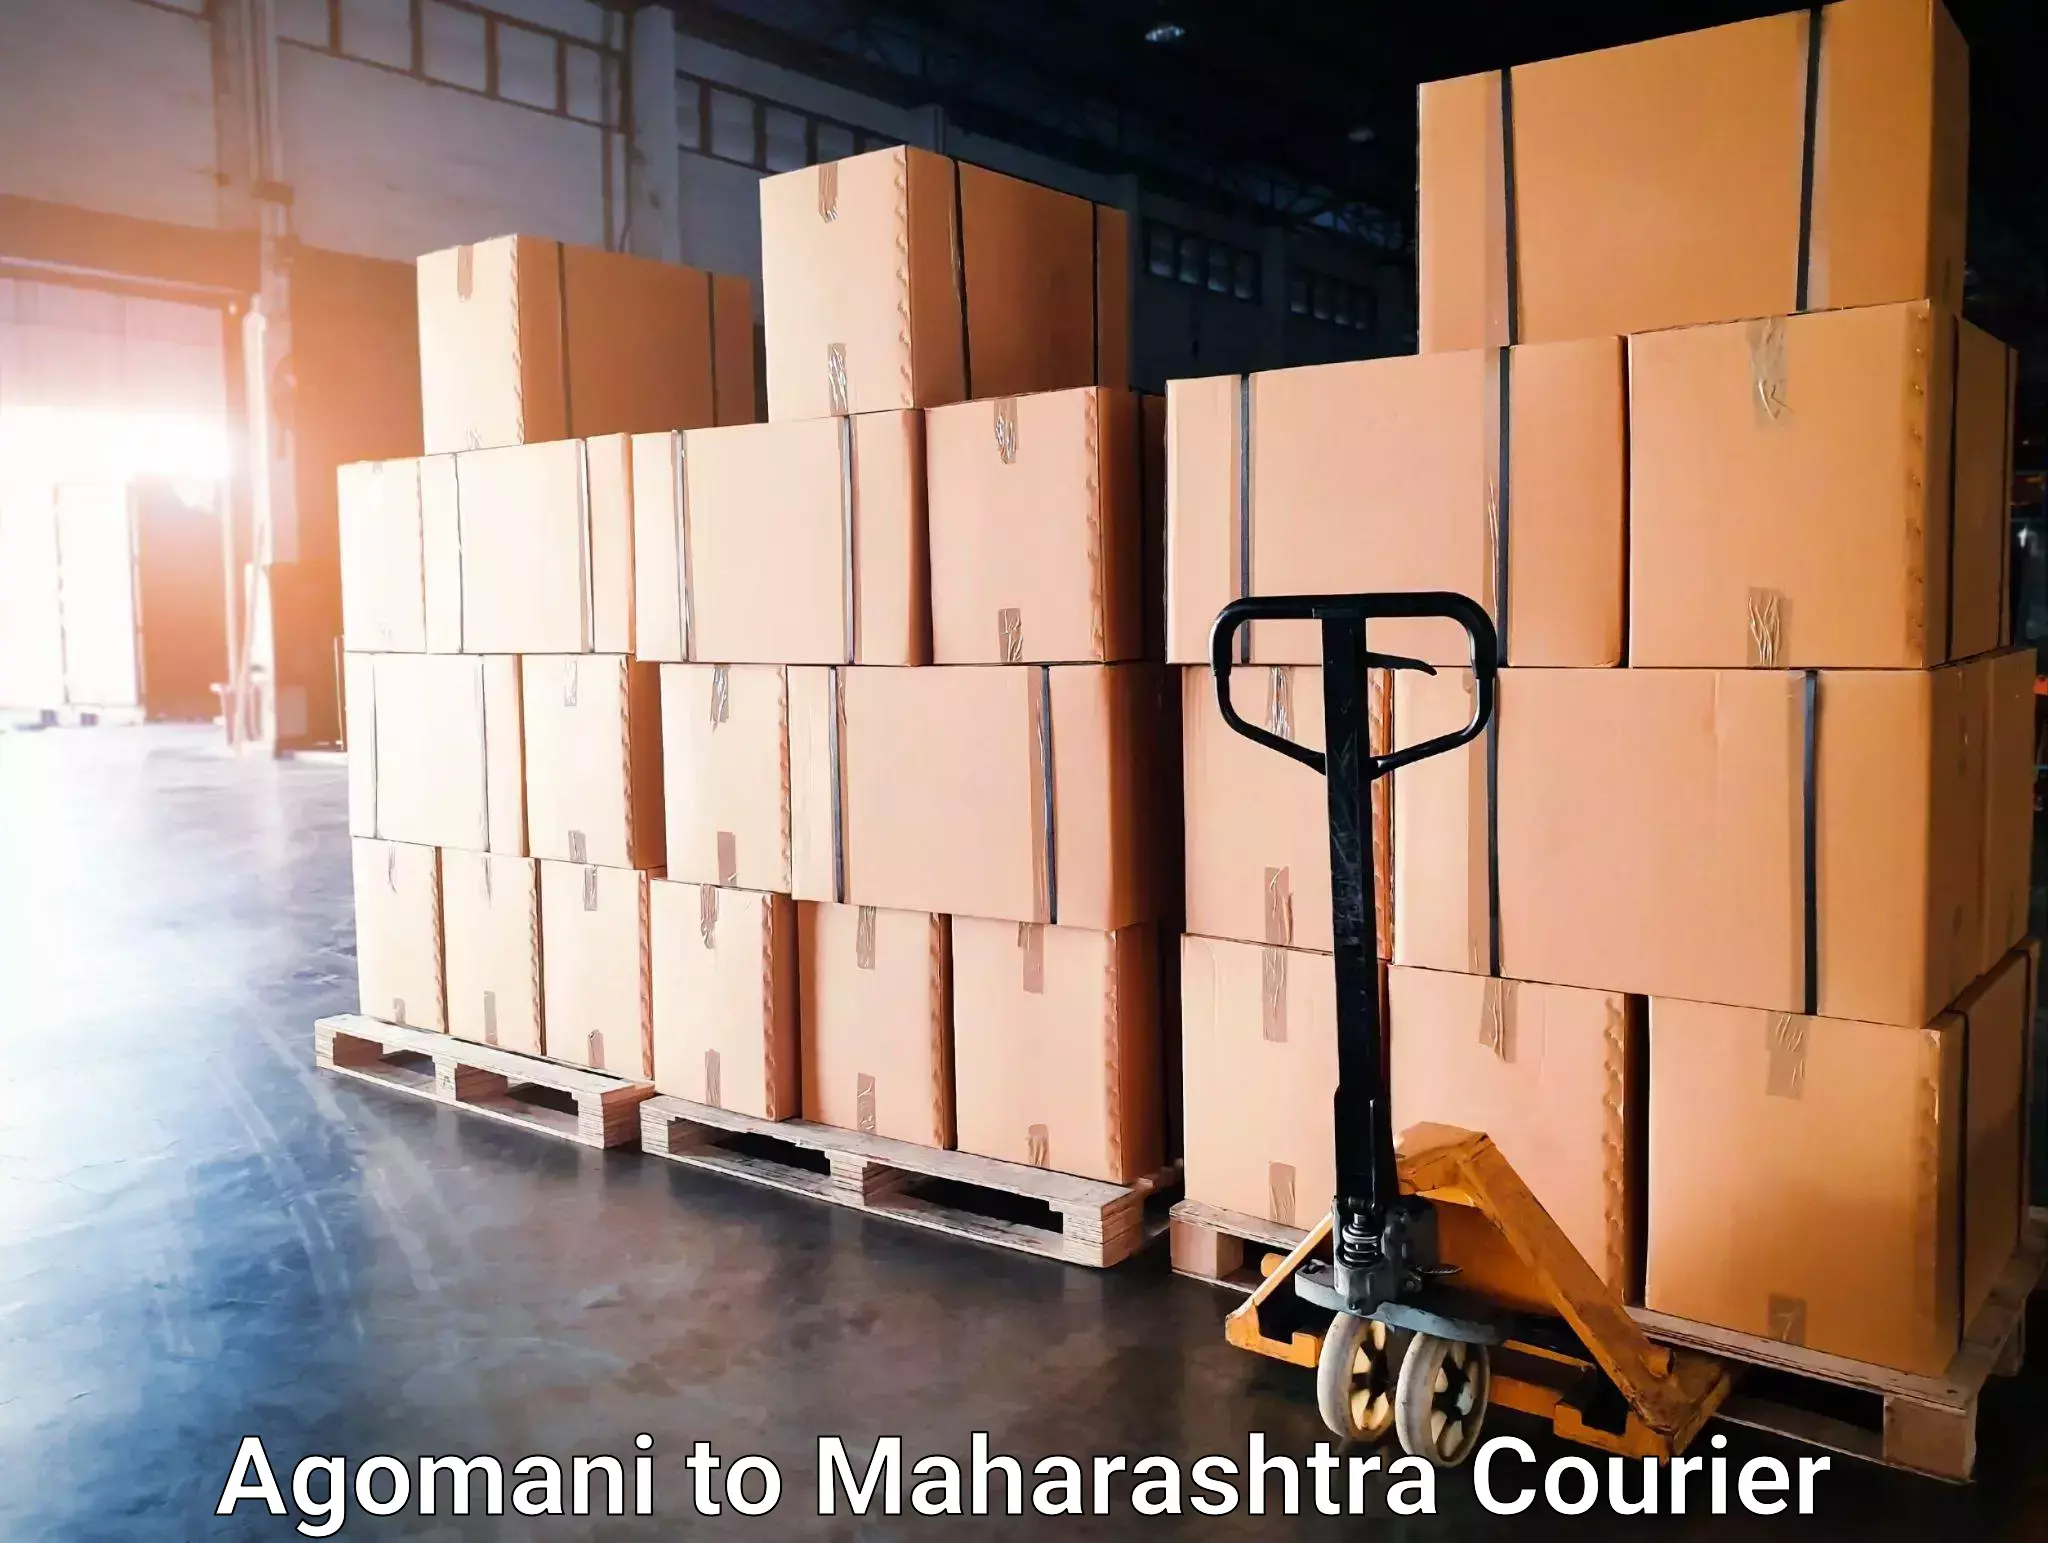 Express delivery capabilities Agomani to Dadar